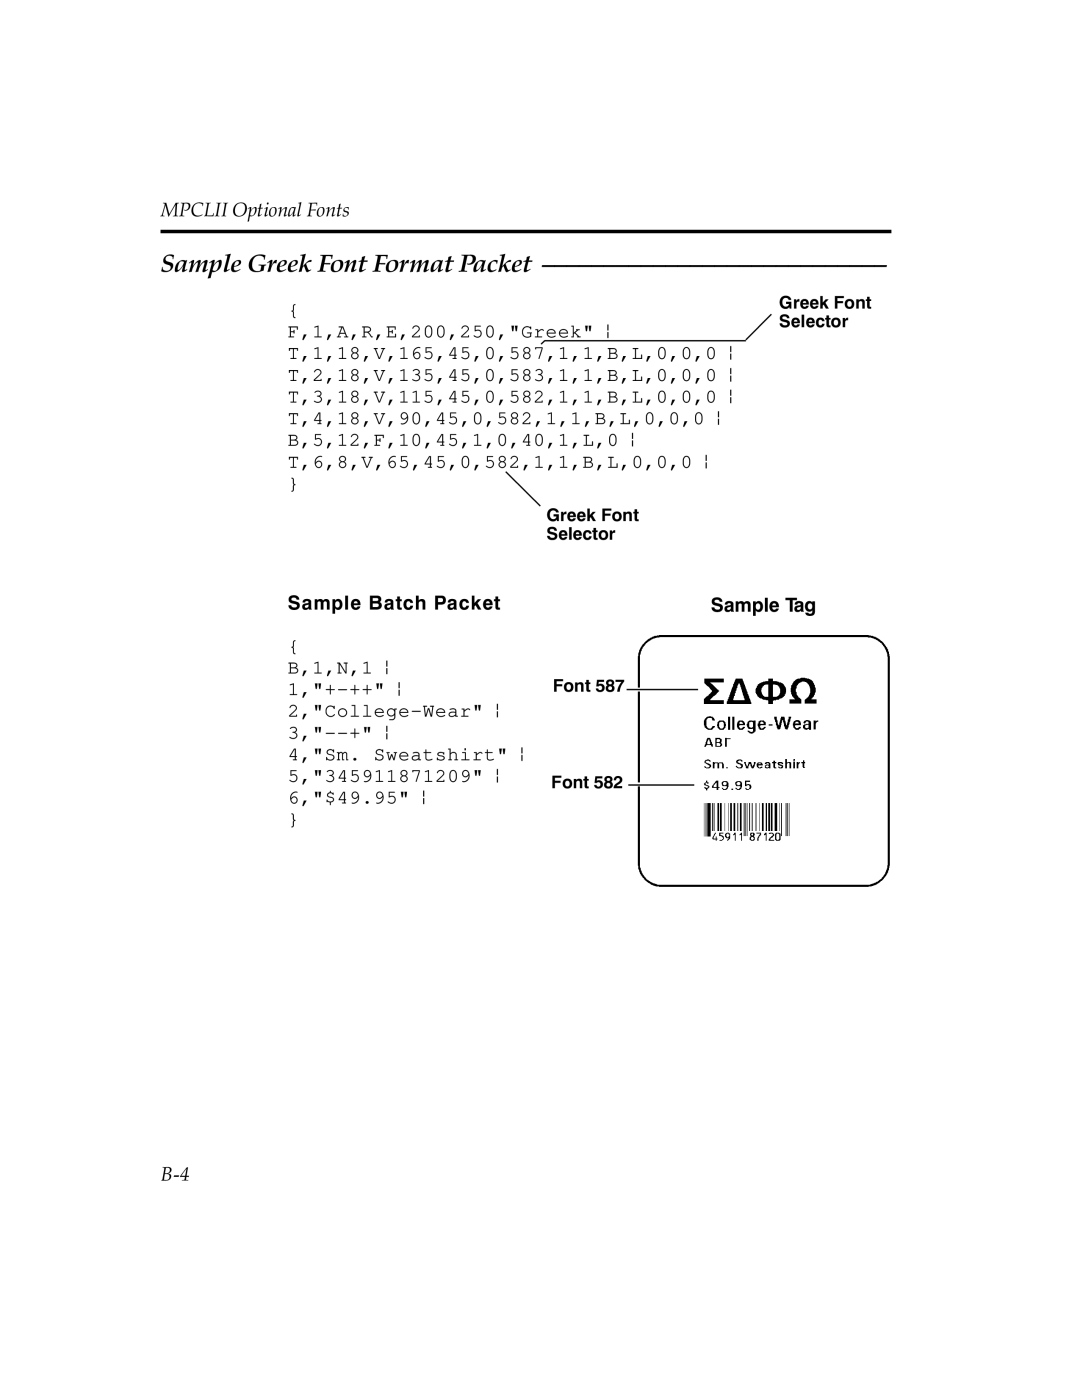 Paxar MPCL II manual Sample Greek Font Format Packet, MPCLII Optional Fonts, Sample Batch Packet, Sample Tag 